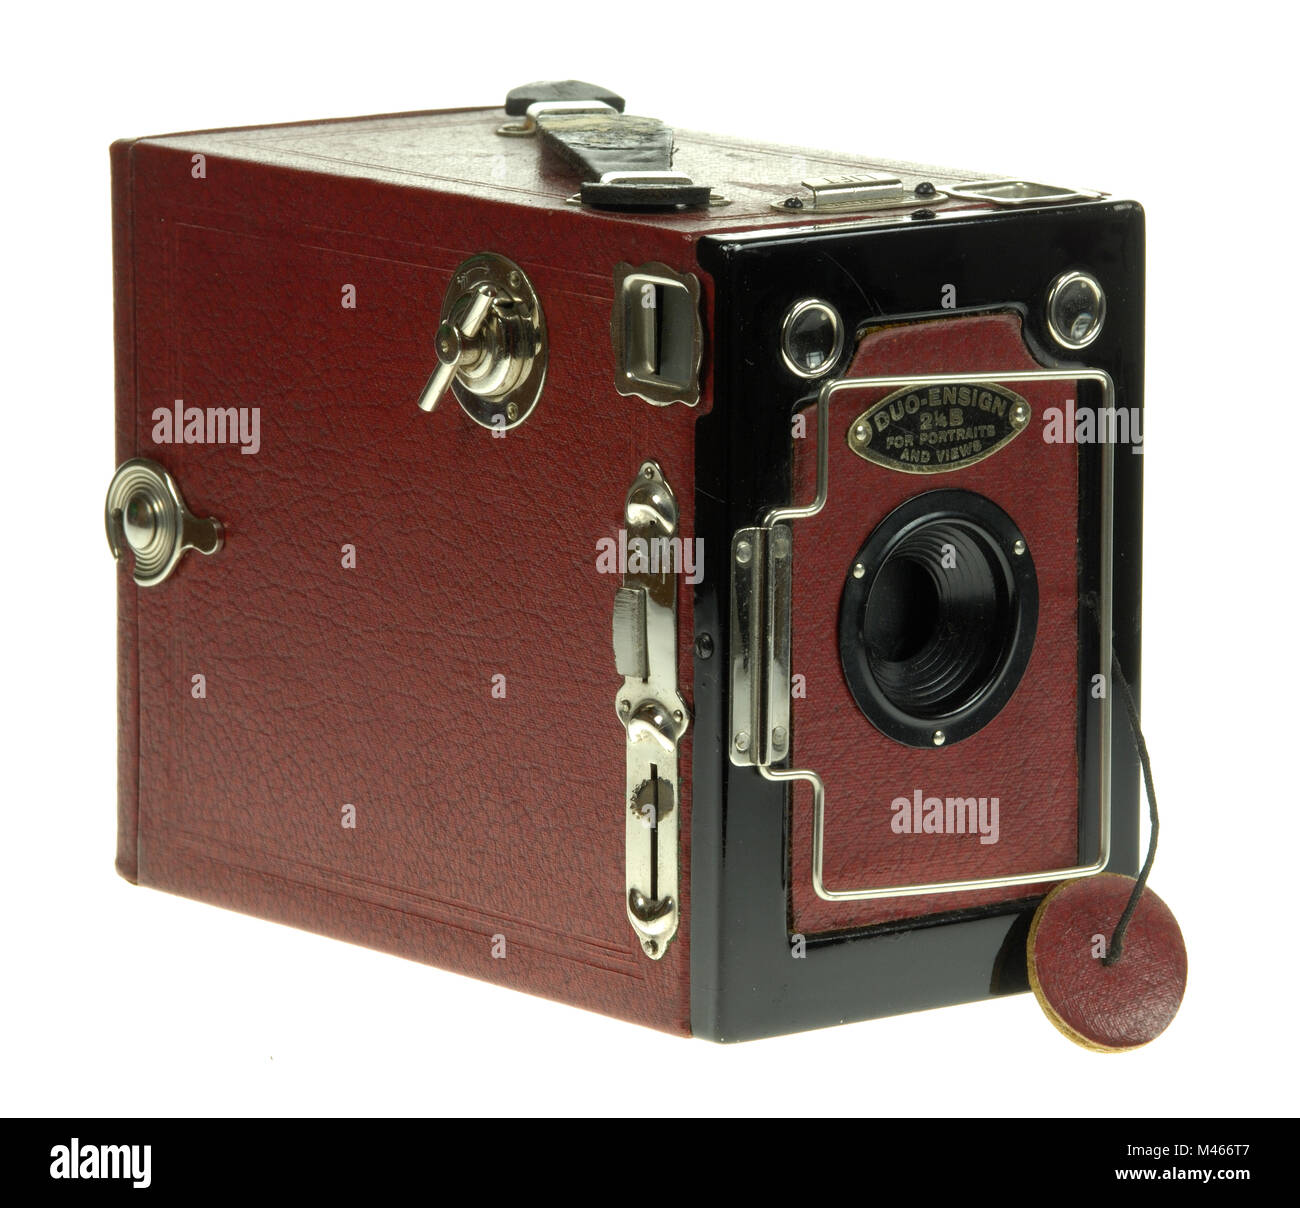 Ensign-Duo Red Box Kamera c 1930 von Houghton-Butcher Co.Ltd. Stockfoto